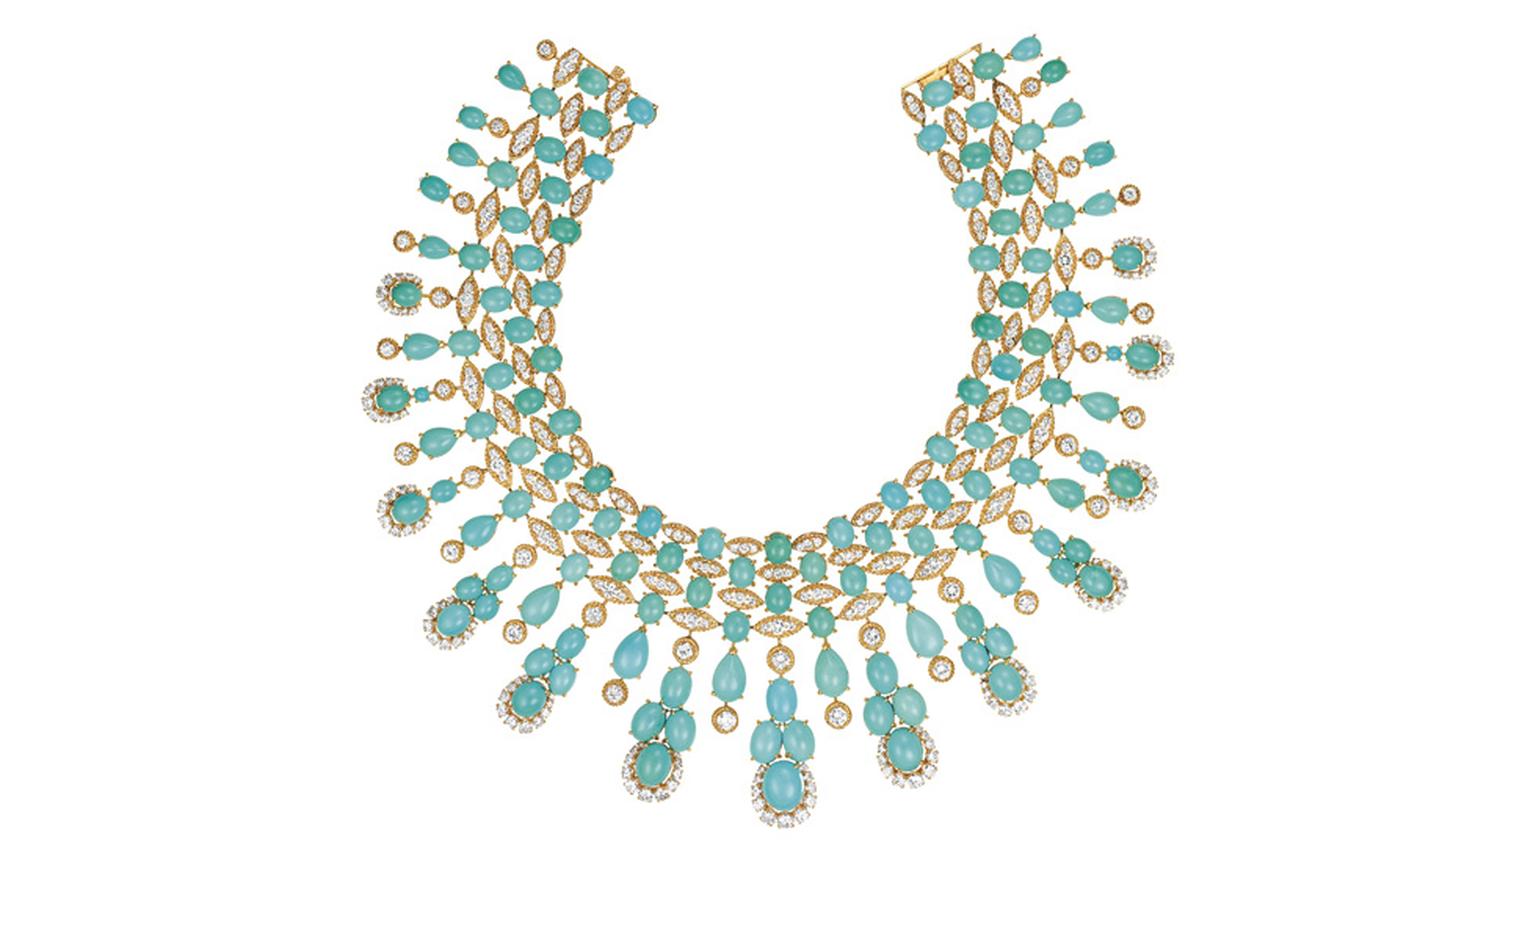 Van Cleef & Arpels Panka necklace. Gold, diamonds & turquoise, 1974. Worn by Eva Mendes.